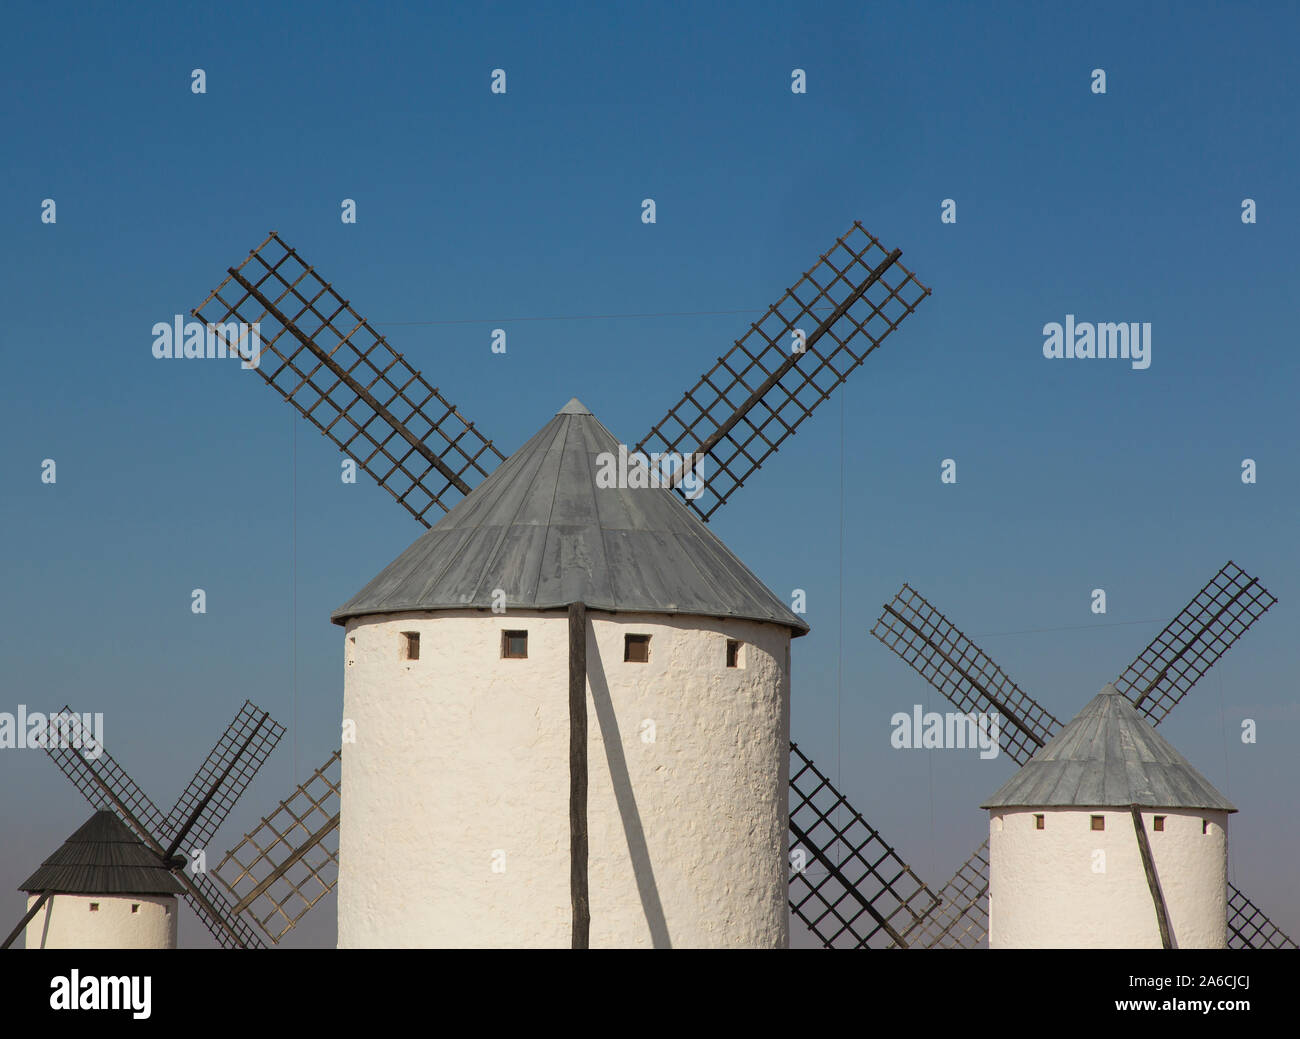 Three windmills against a blue sky in Campo de Criptana, Spain Stock Photo